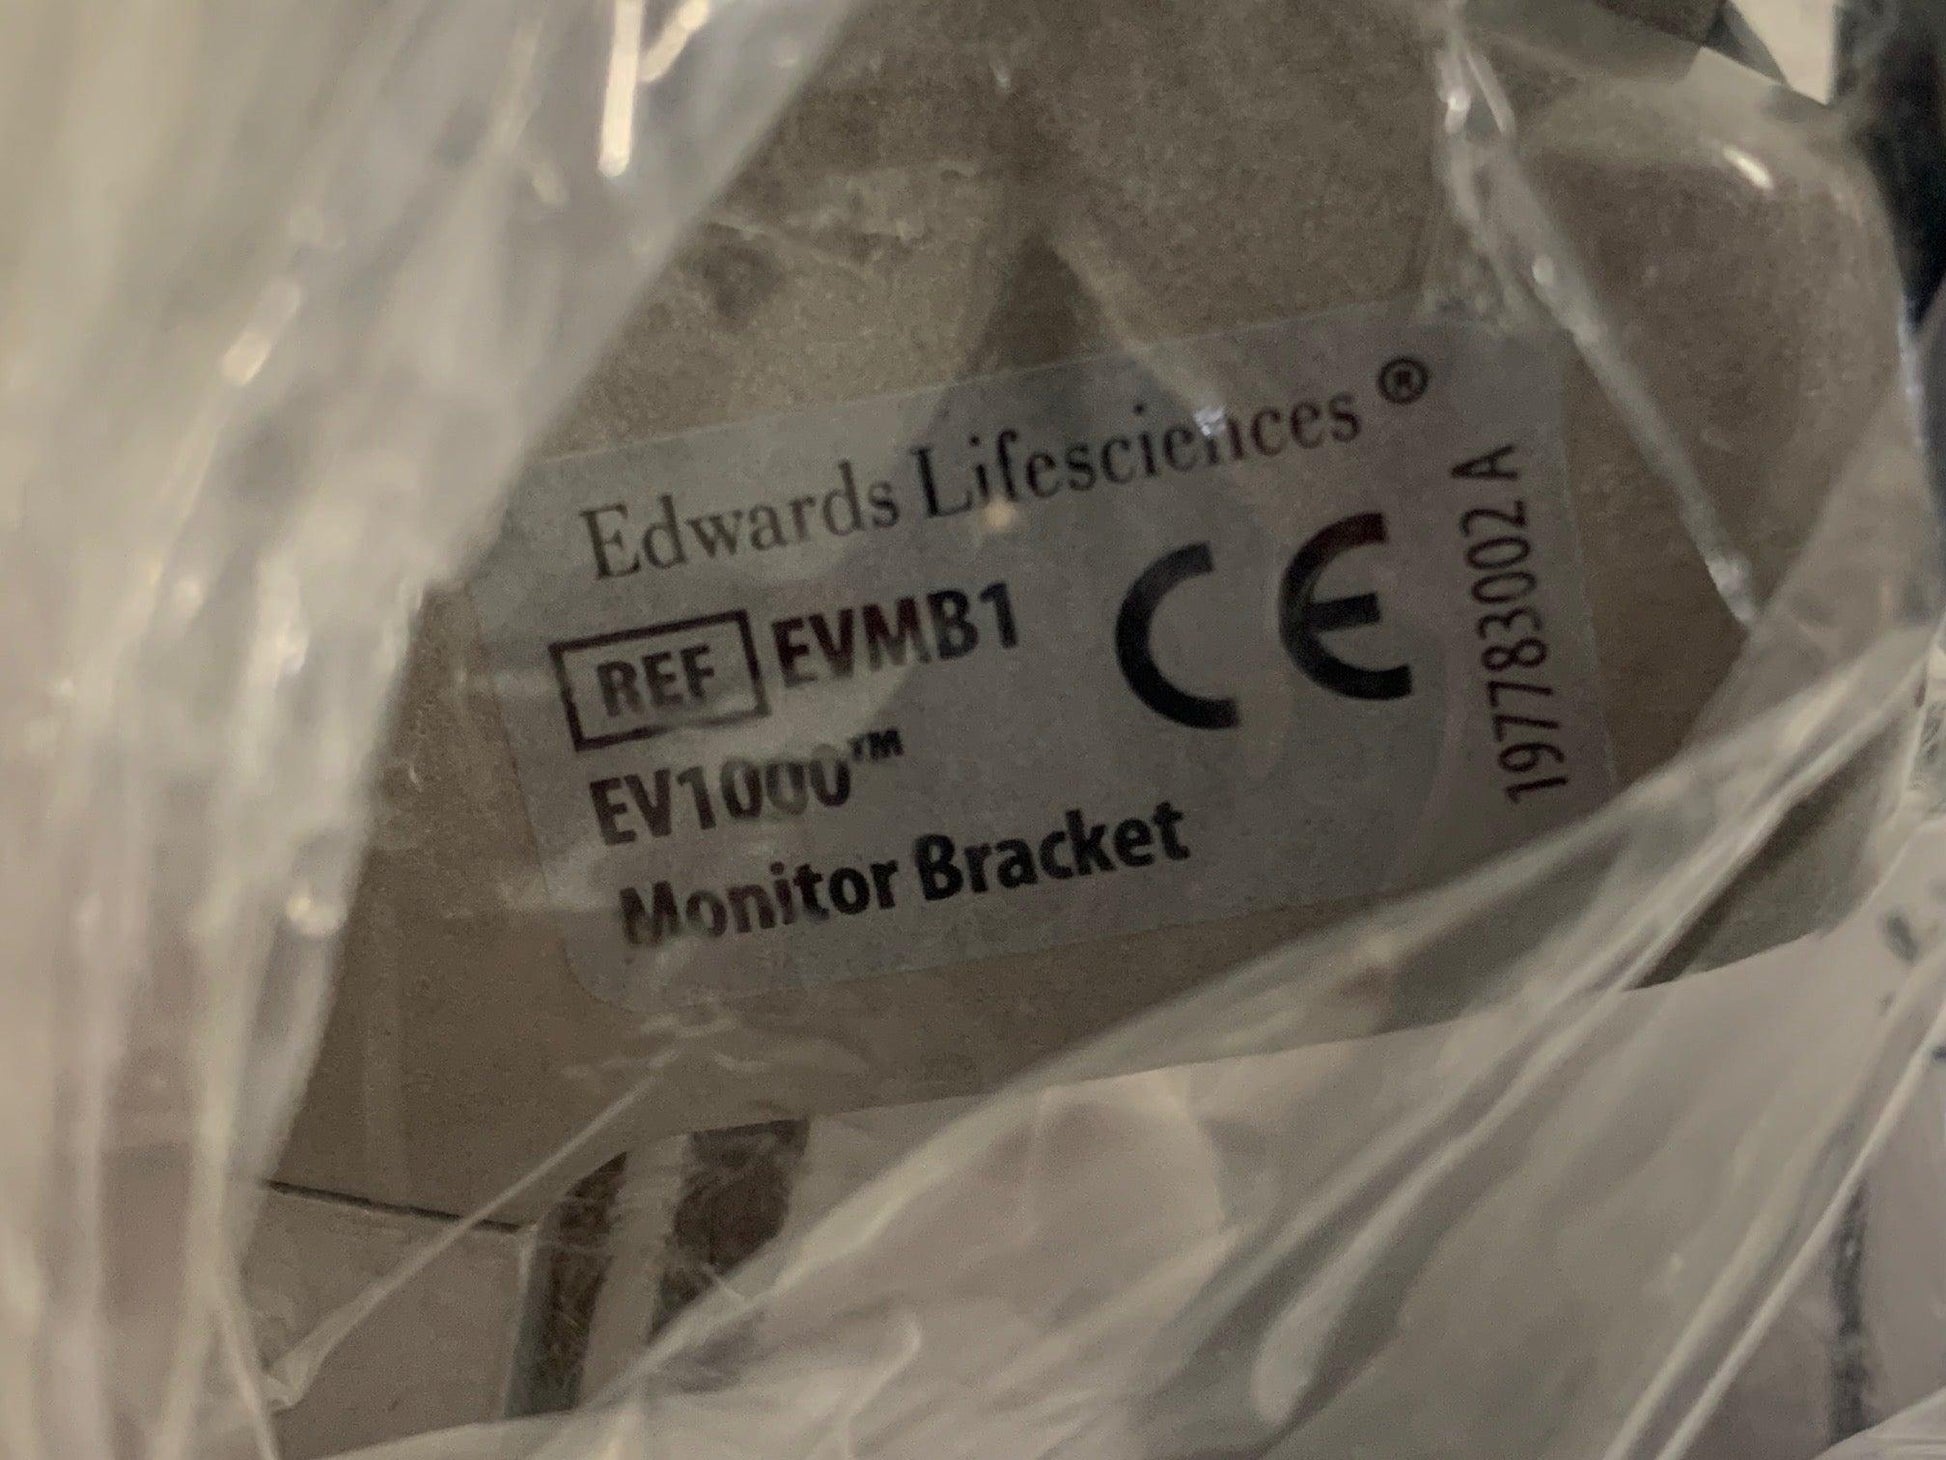 NEW Open Box Edwards Lifesciences EV1000 Monitor EV1000M with Brackets EVMB1 - MBR Medicals